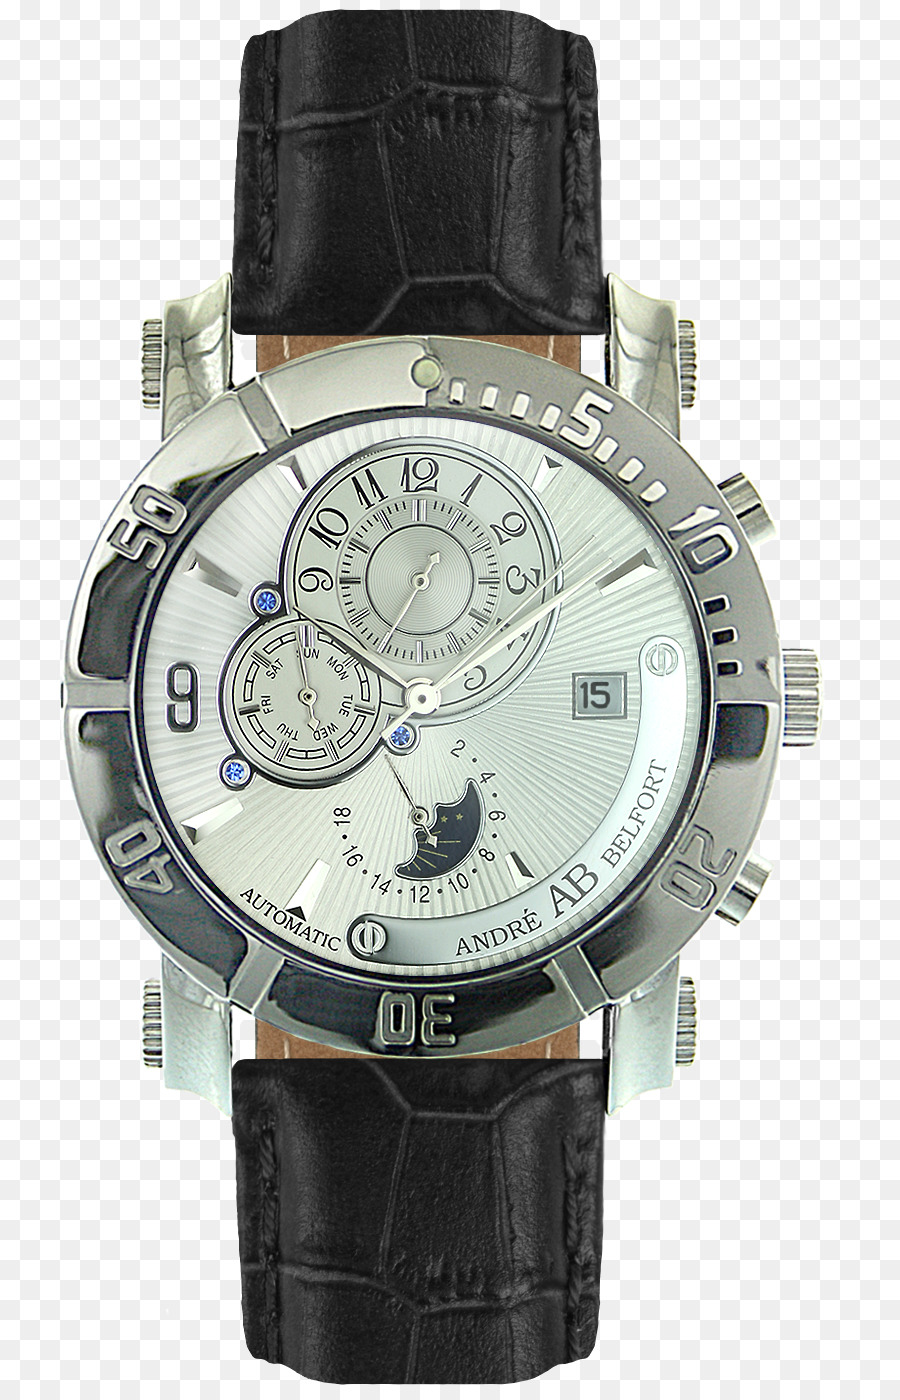 Cinturino di orologio in Argento design Industriale - ANDR & Eacute; S INIESTA